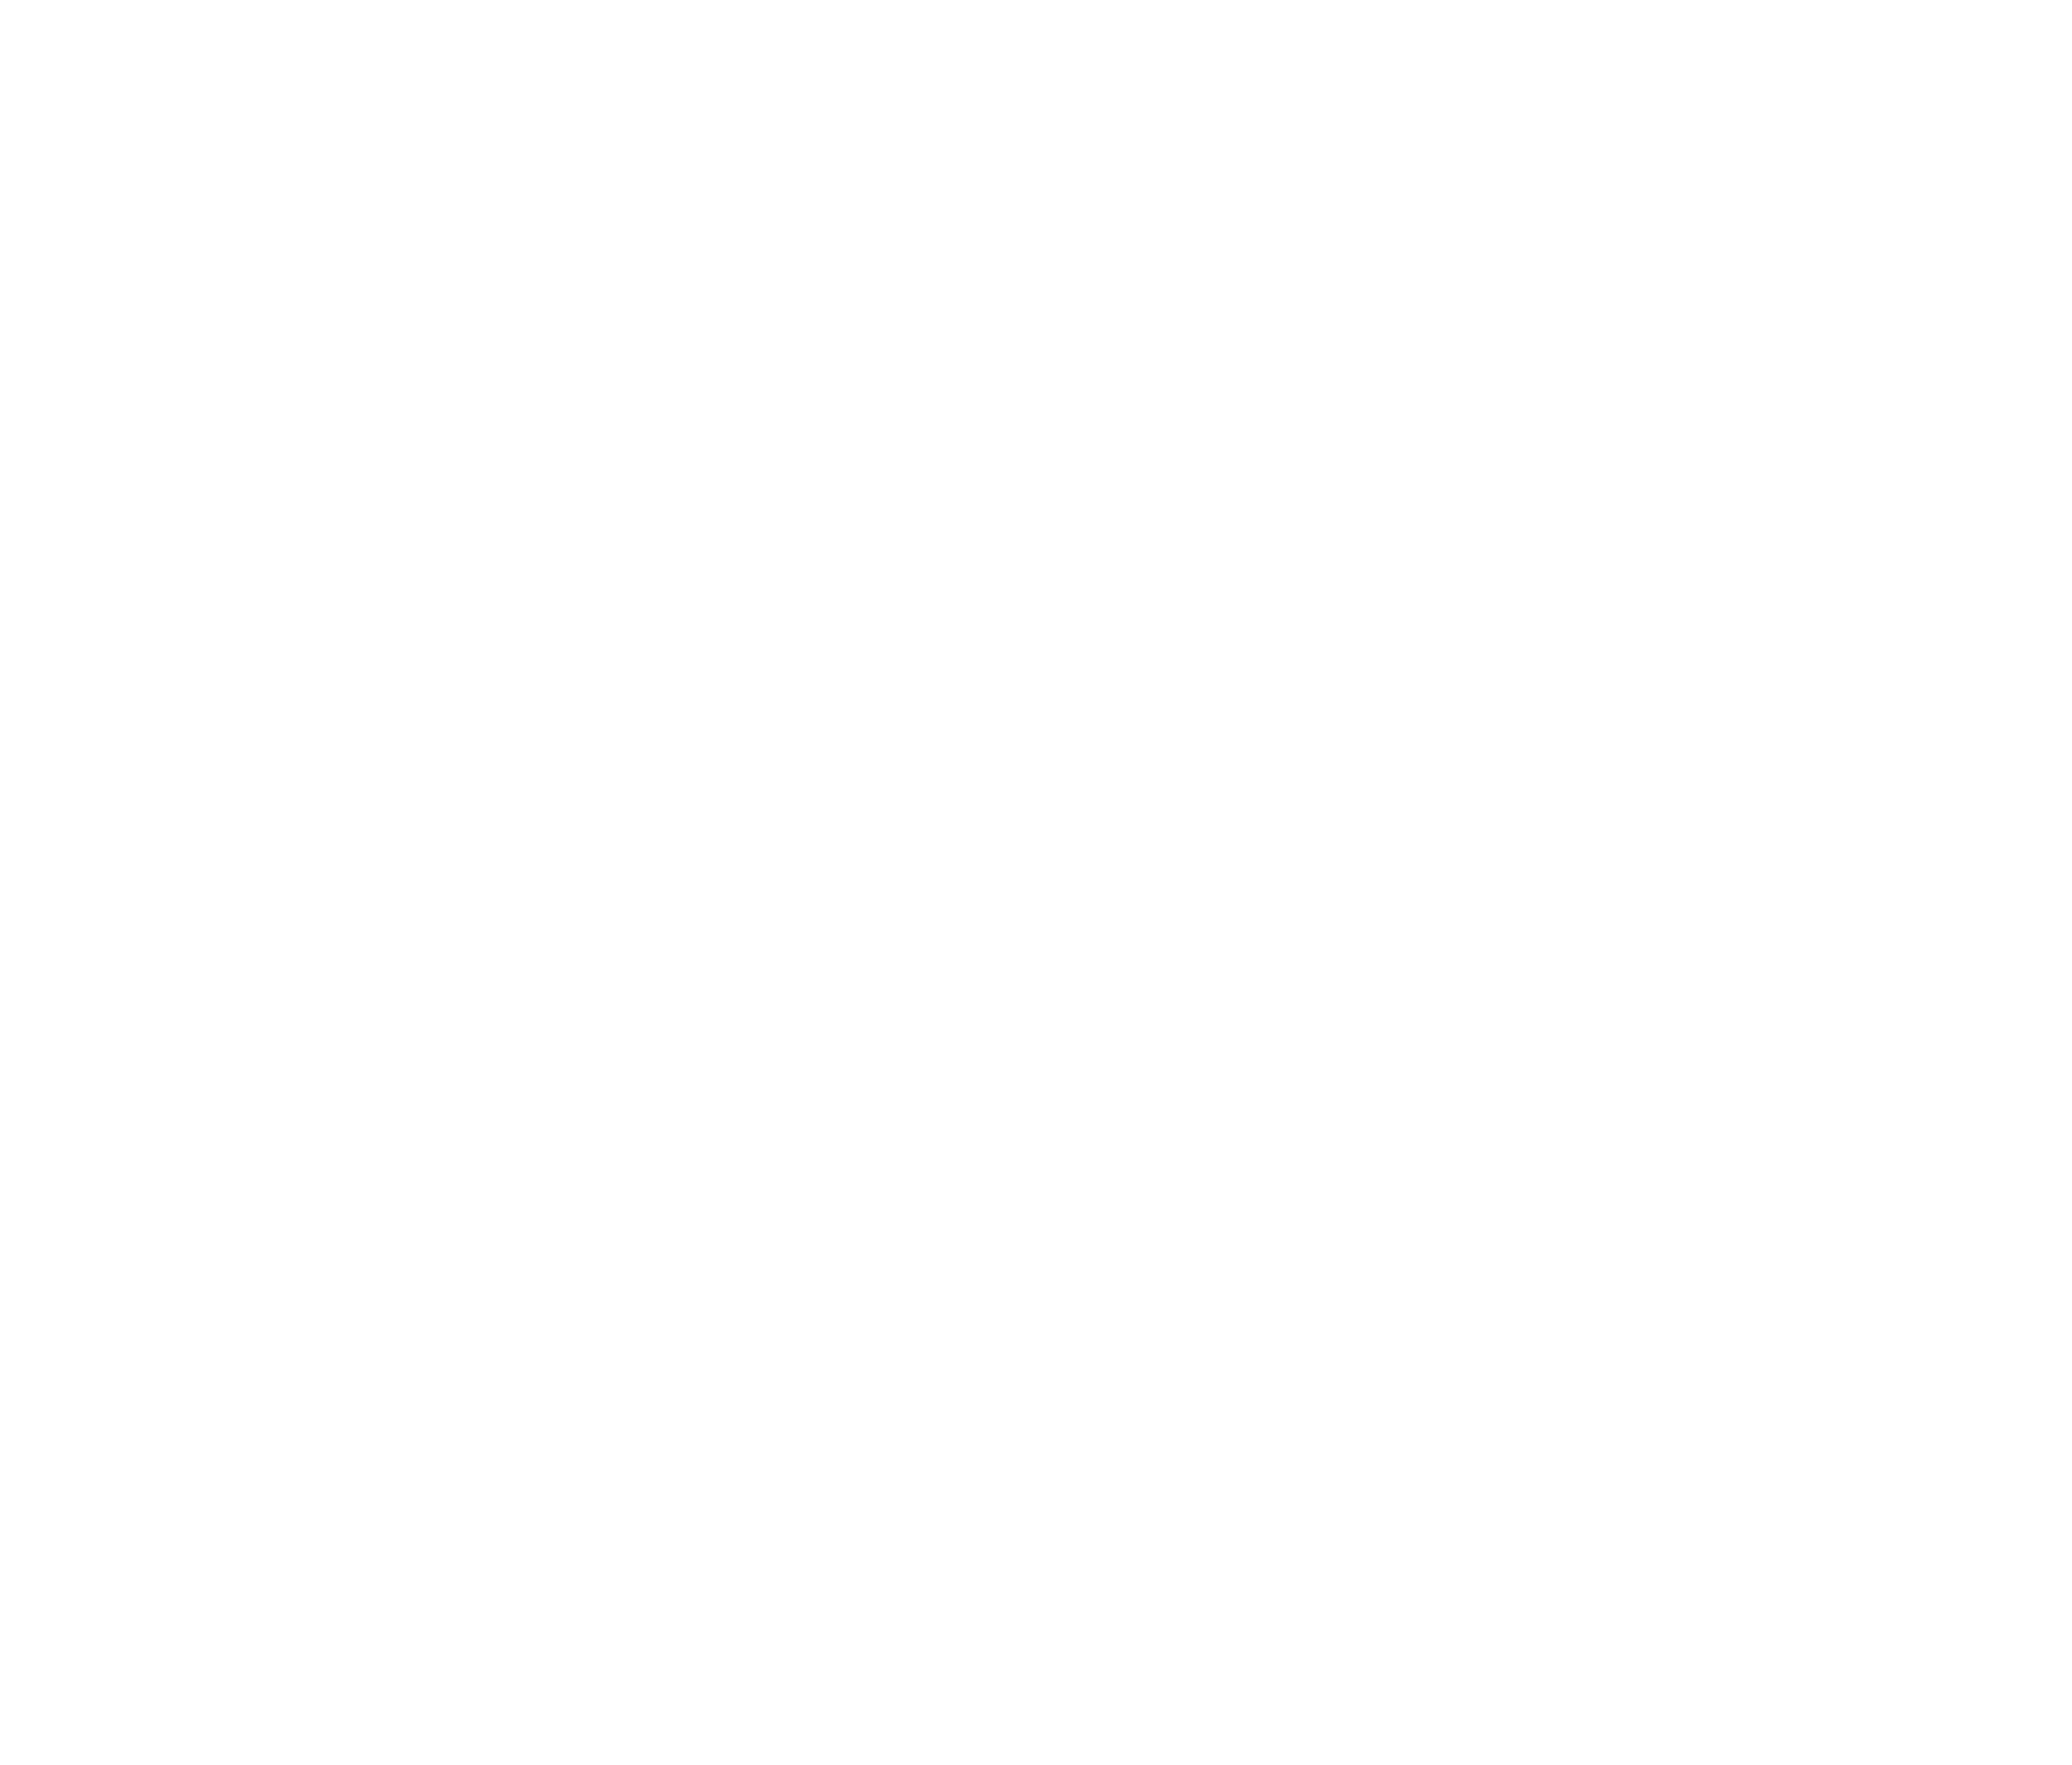 Adventure Van Rental